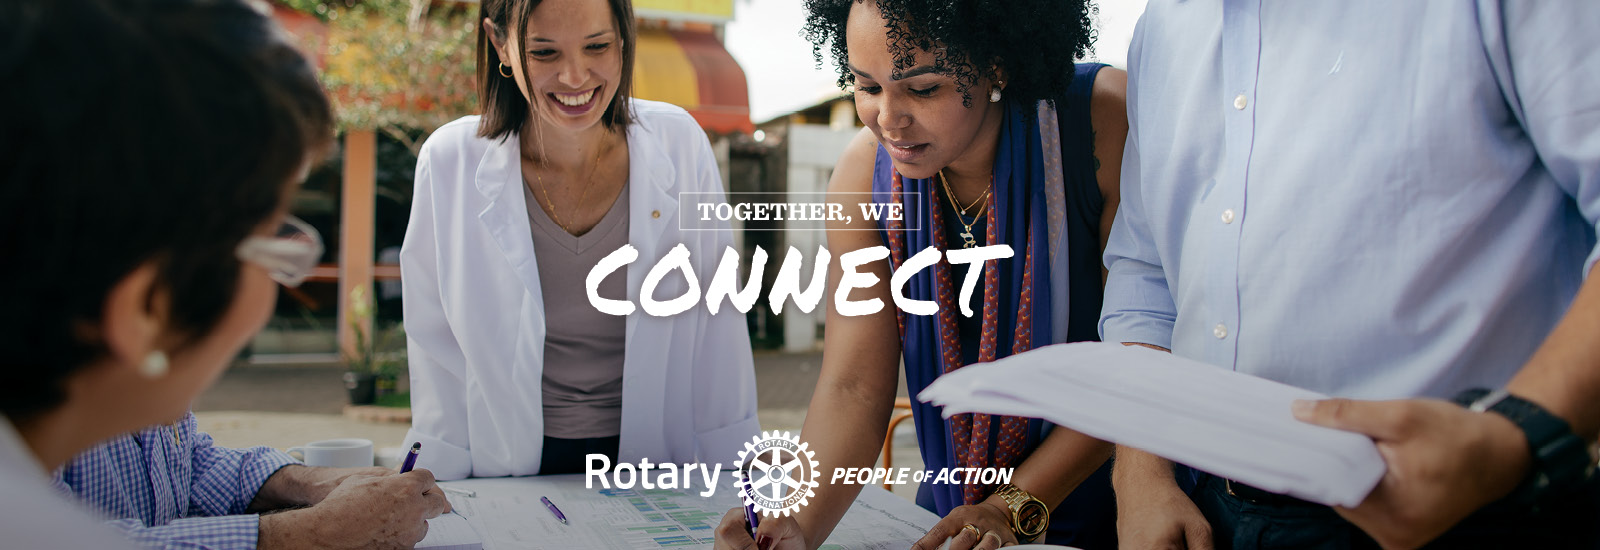 Rotary Club of Portland, Maine Banner Image